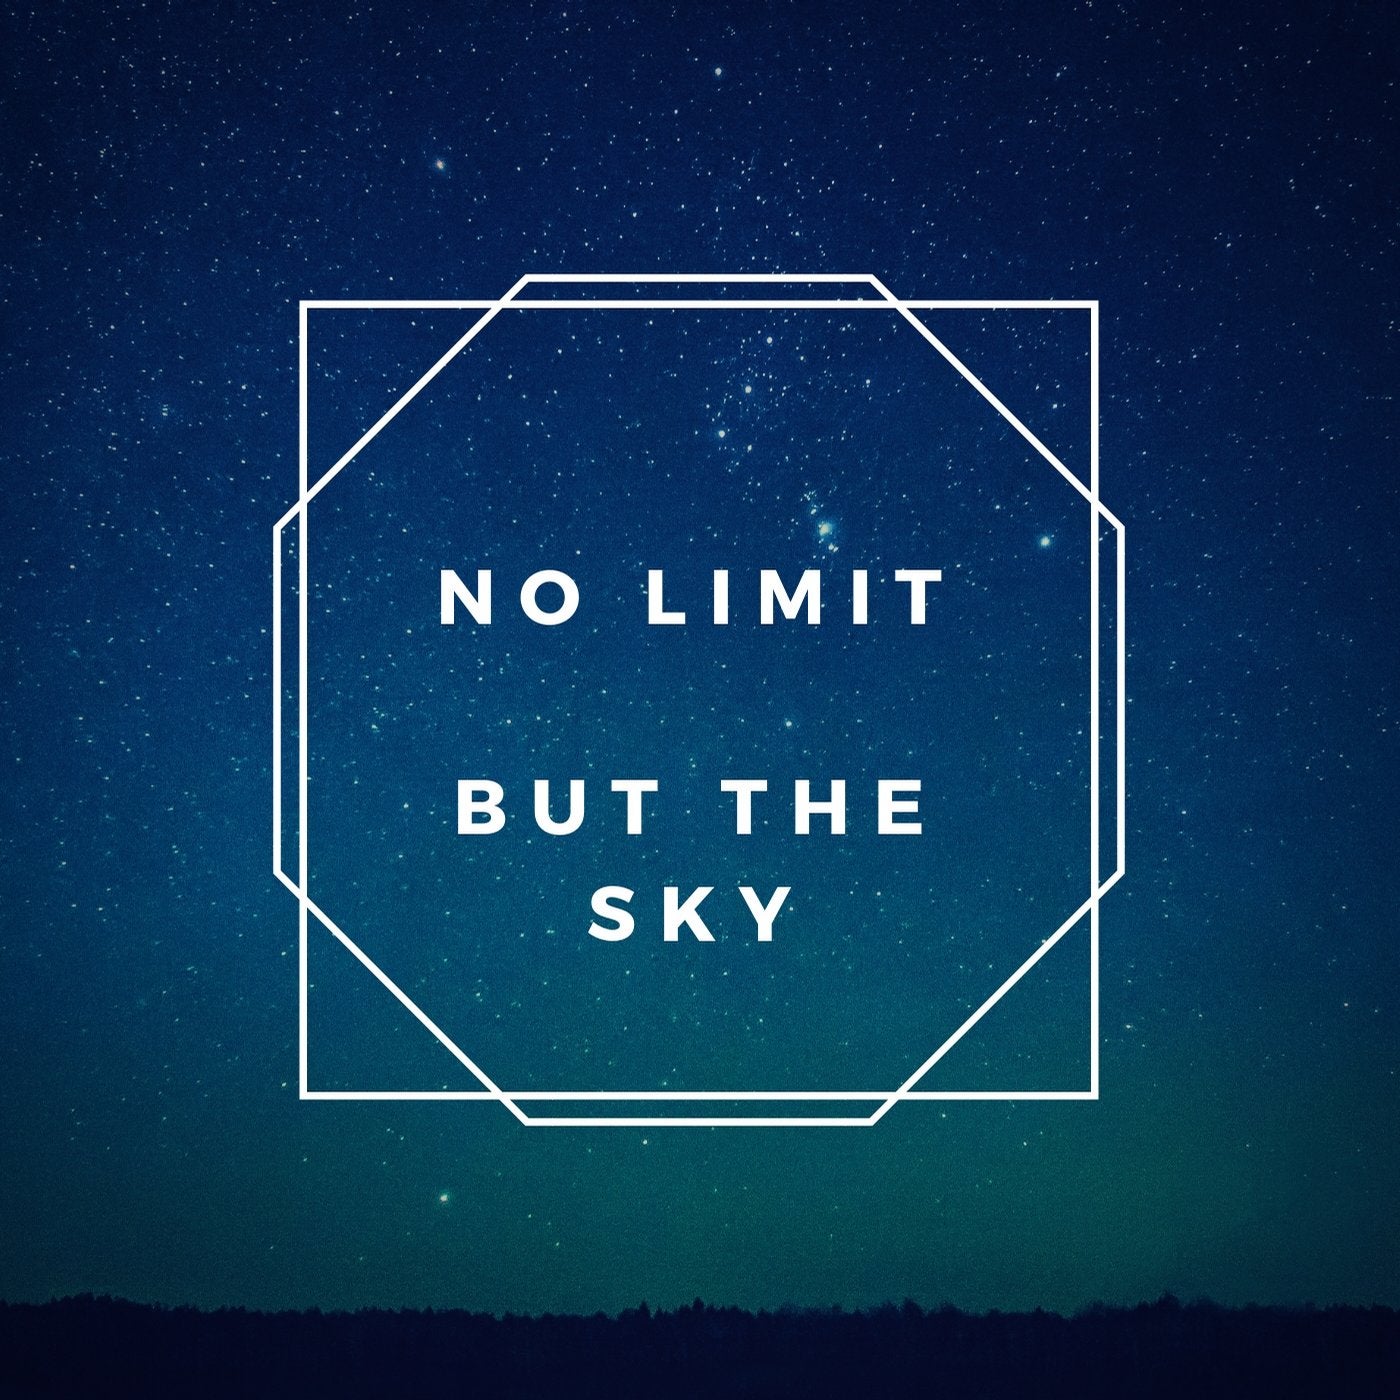 No limit but the sky